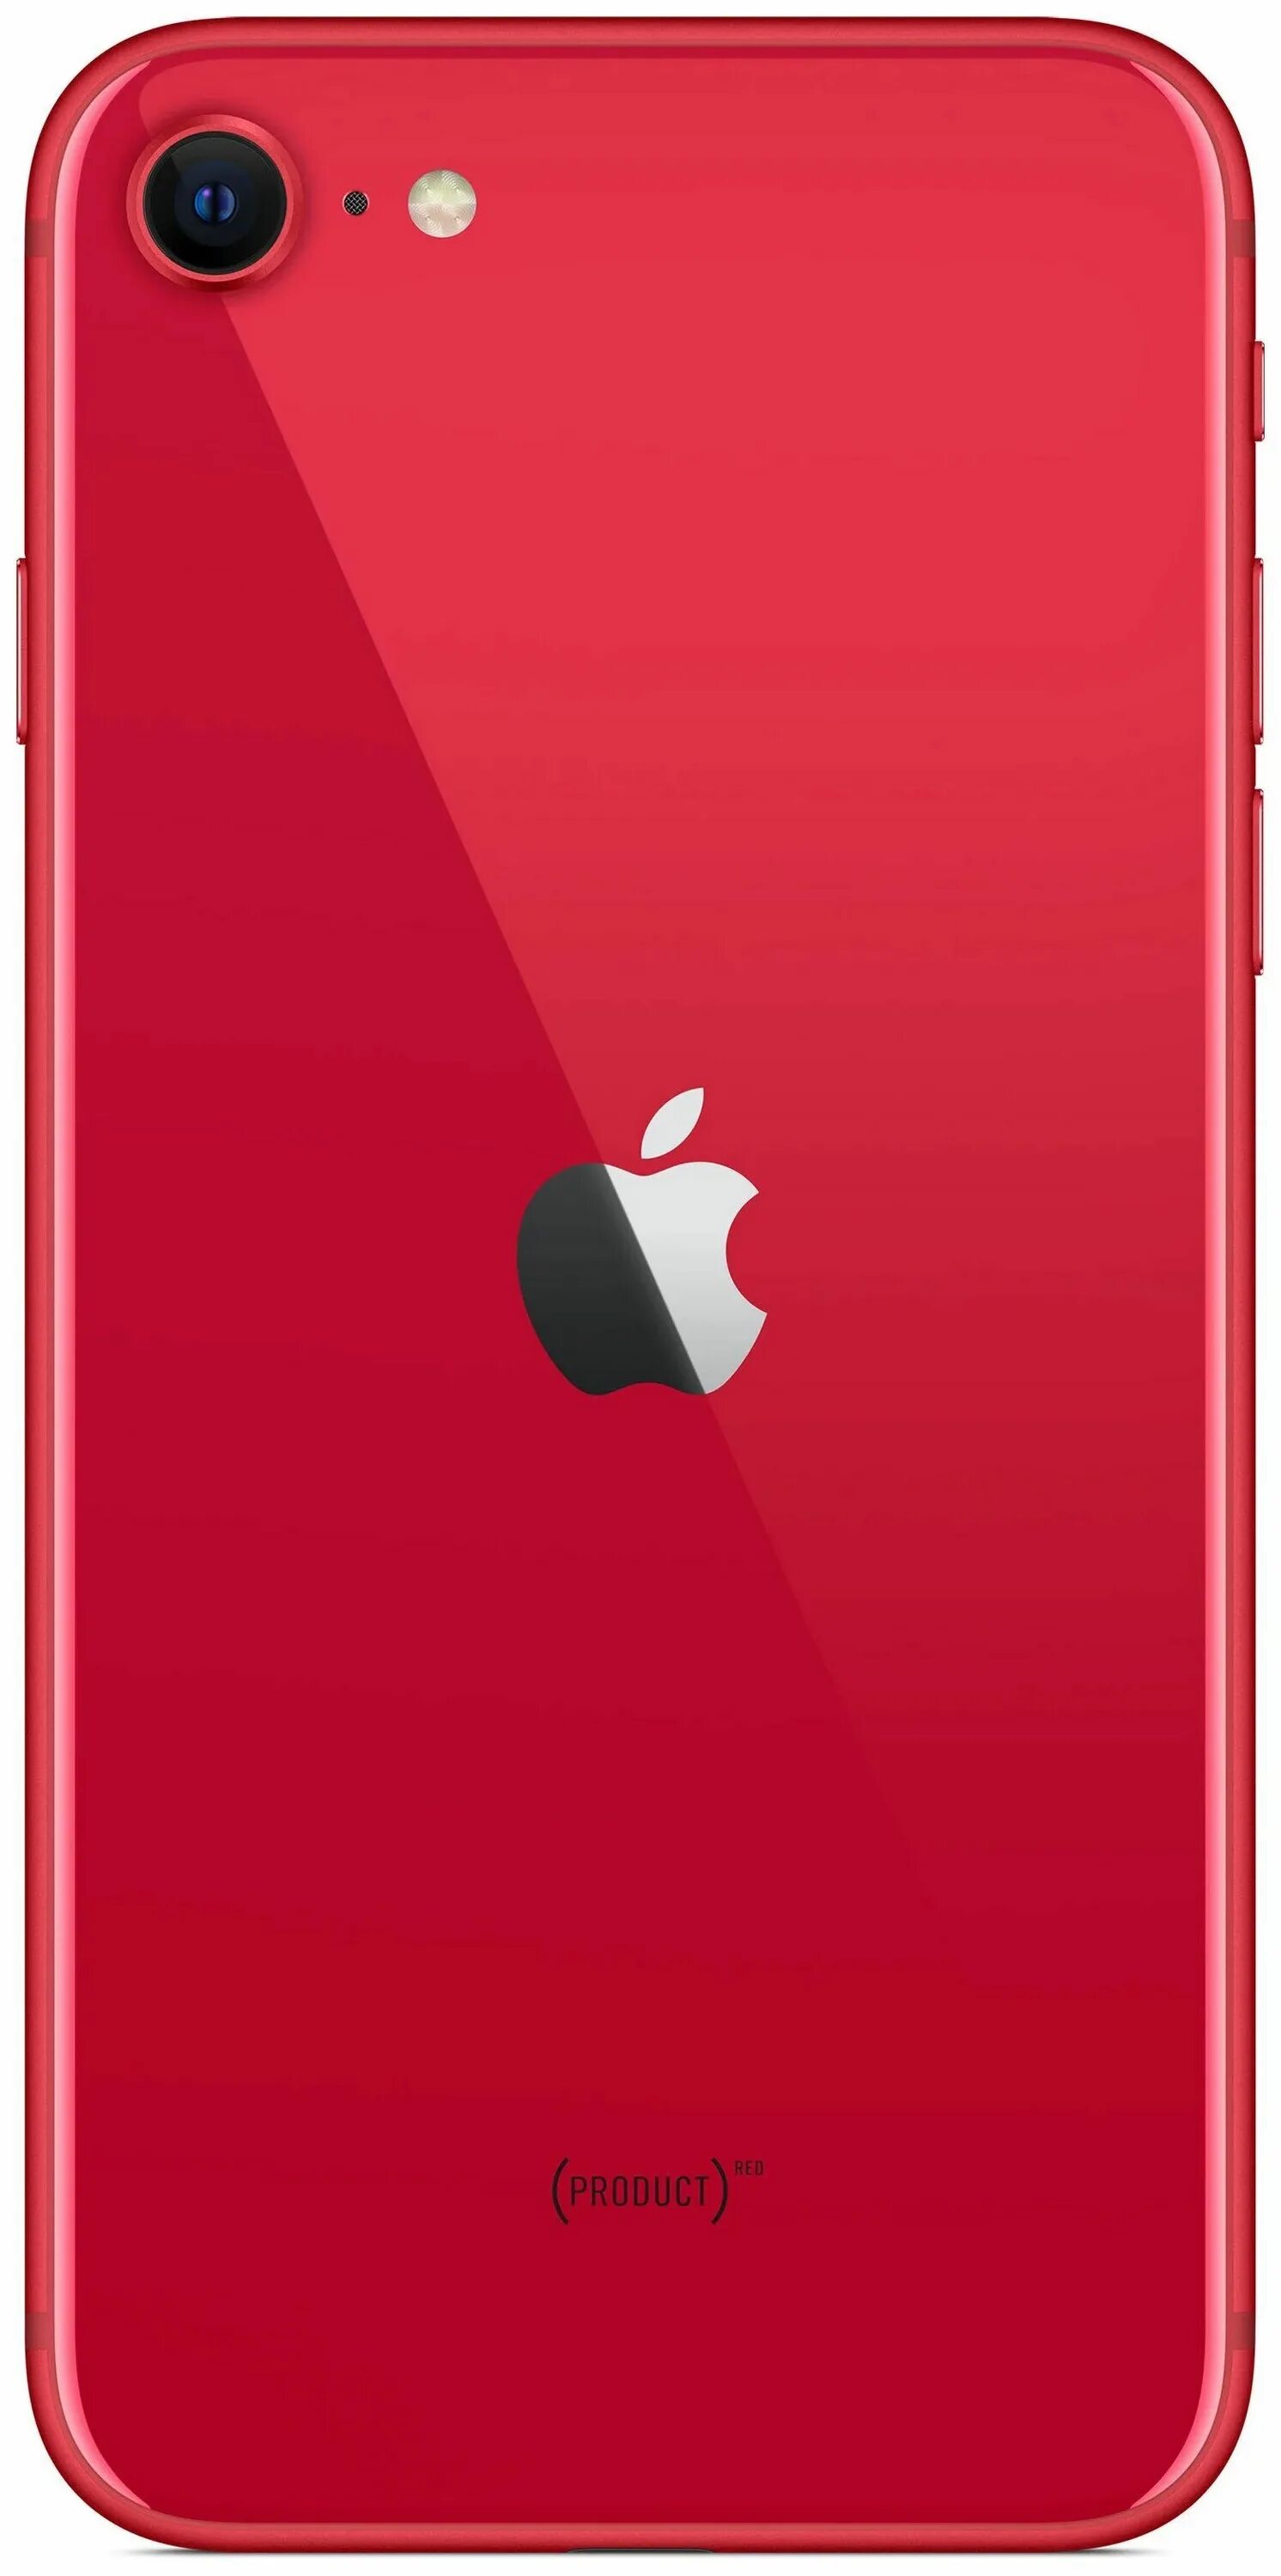 Телефоны айфон 2020. Apple iphone 11 128gb (product)Red. Iphone 12 Mini 128gb Red. Iphone 12 Mini product Red. Apple iphone se 2020 128gb Red.